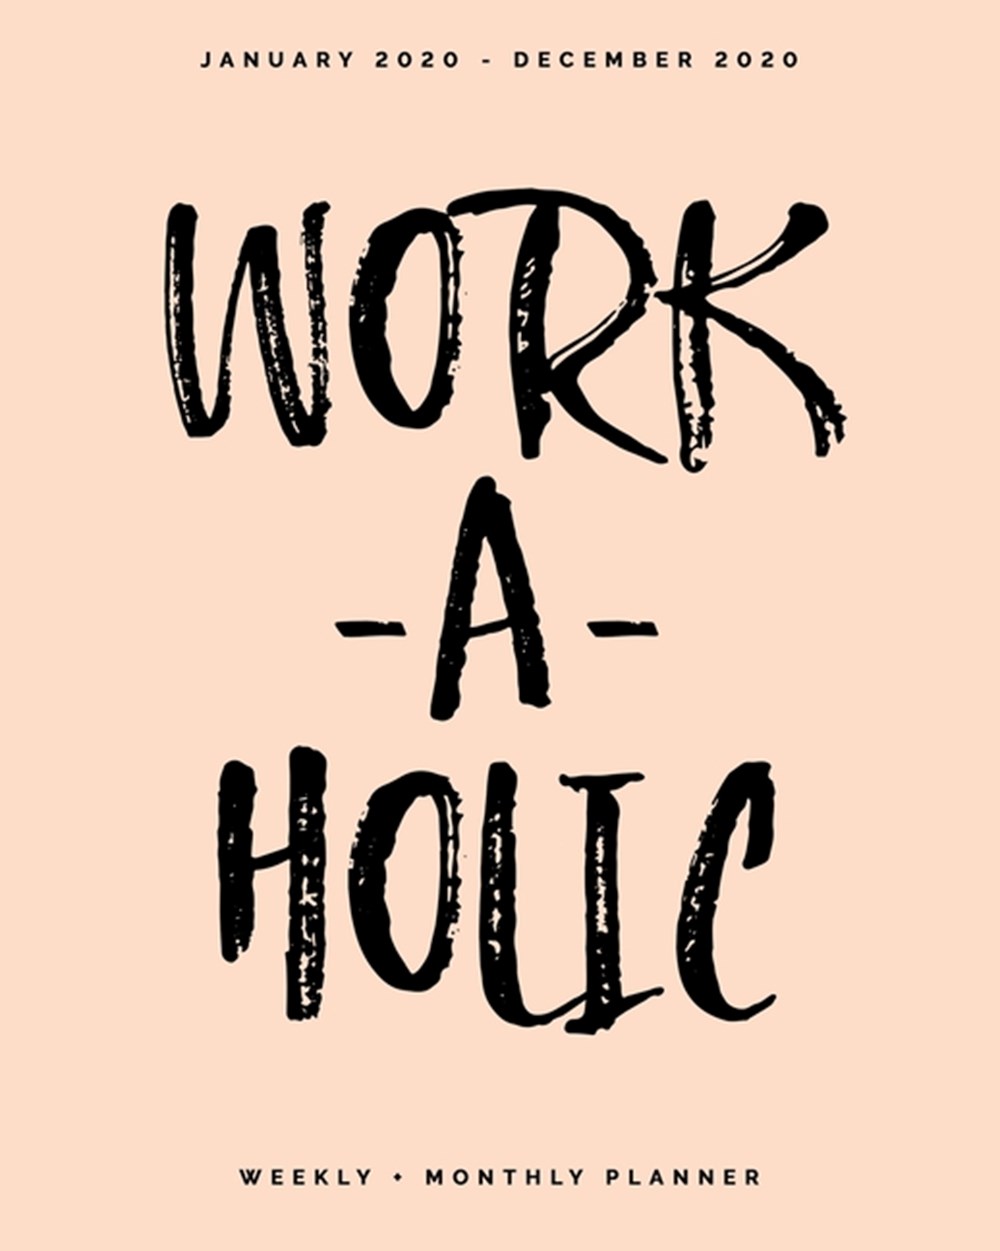 Work-a-holic - January 2020 - December 2020 - Weekly + Monthly Planner Peach Pastel Calendar Organiz